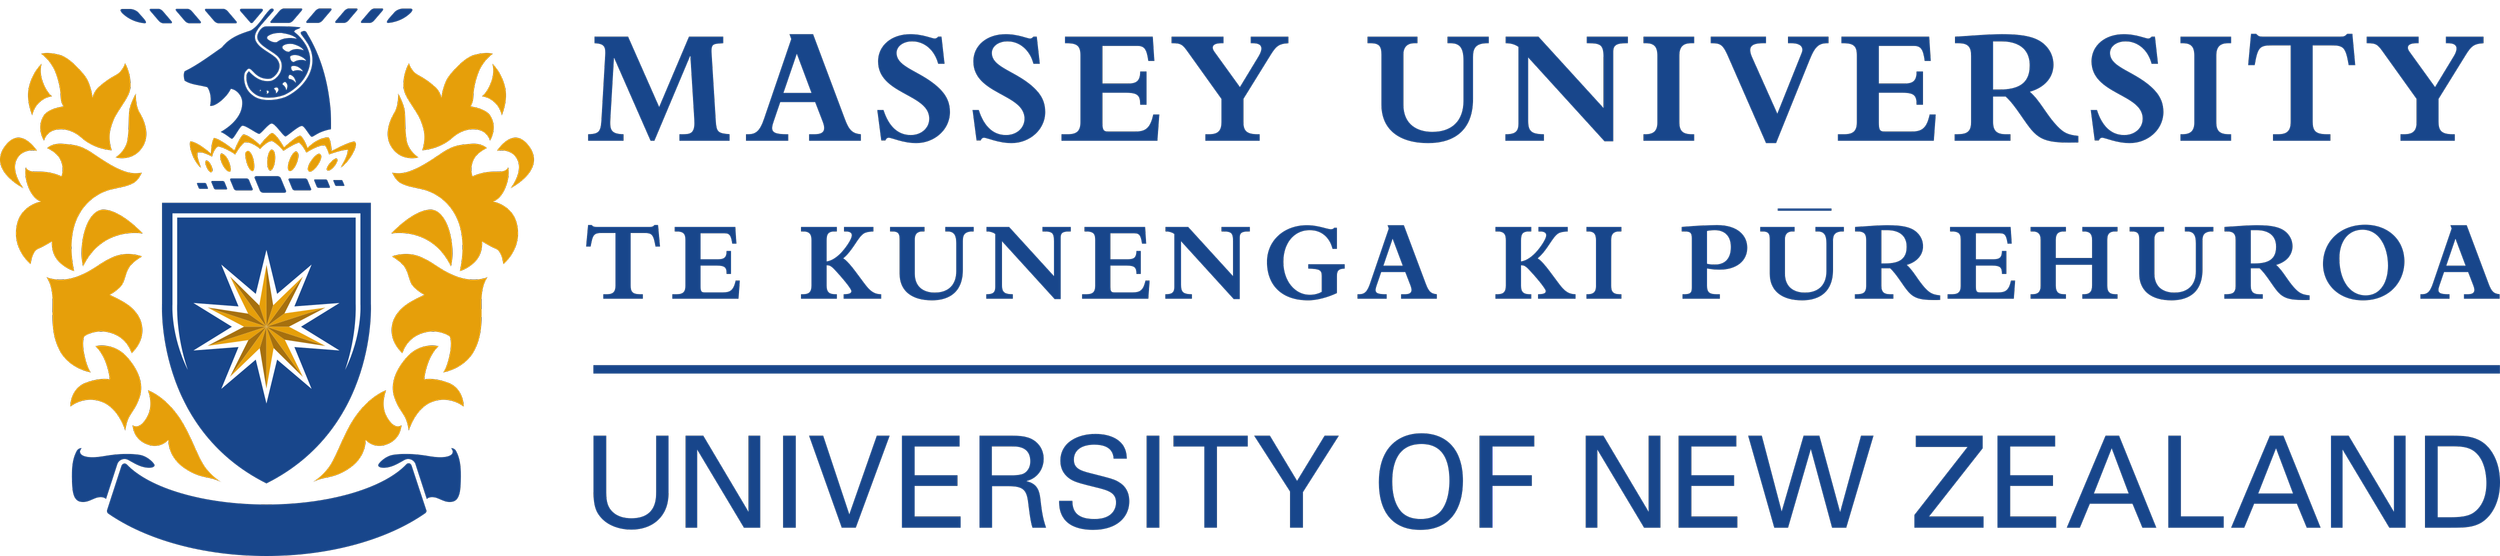 Massey_University_Logo.png